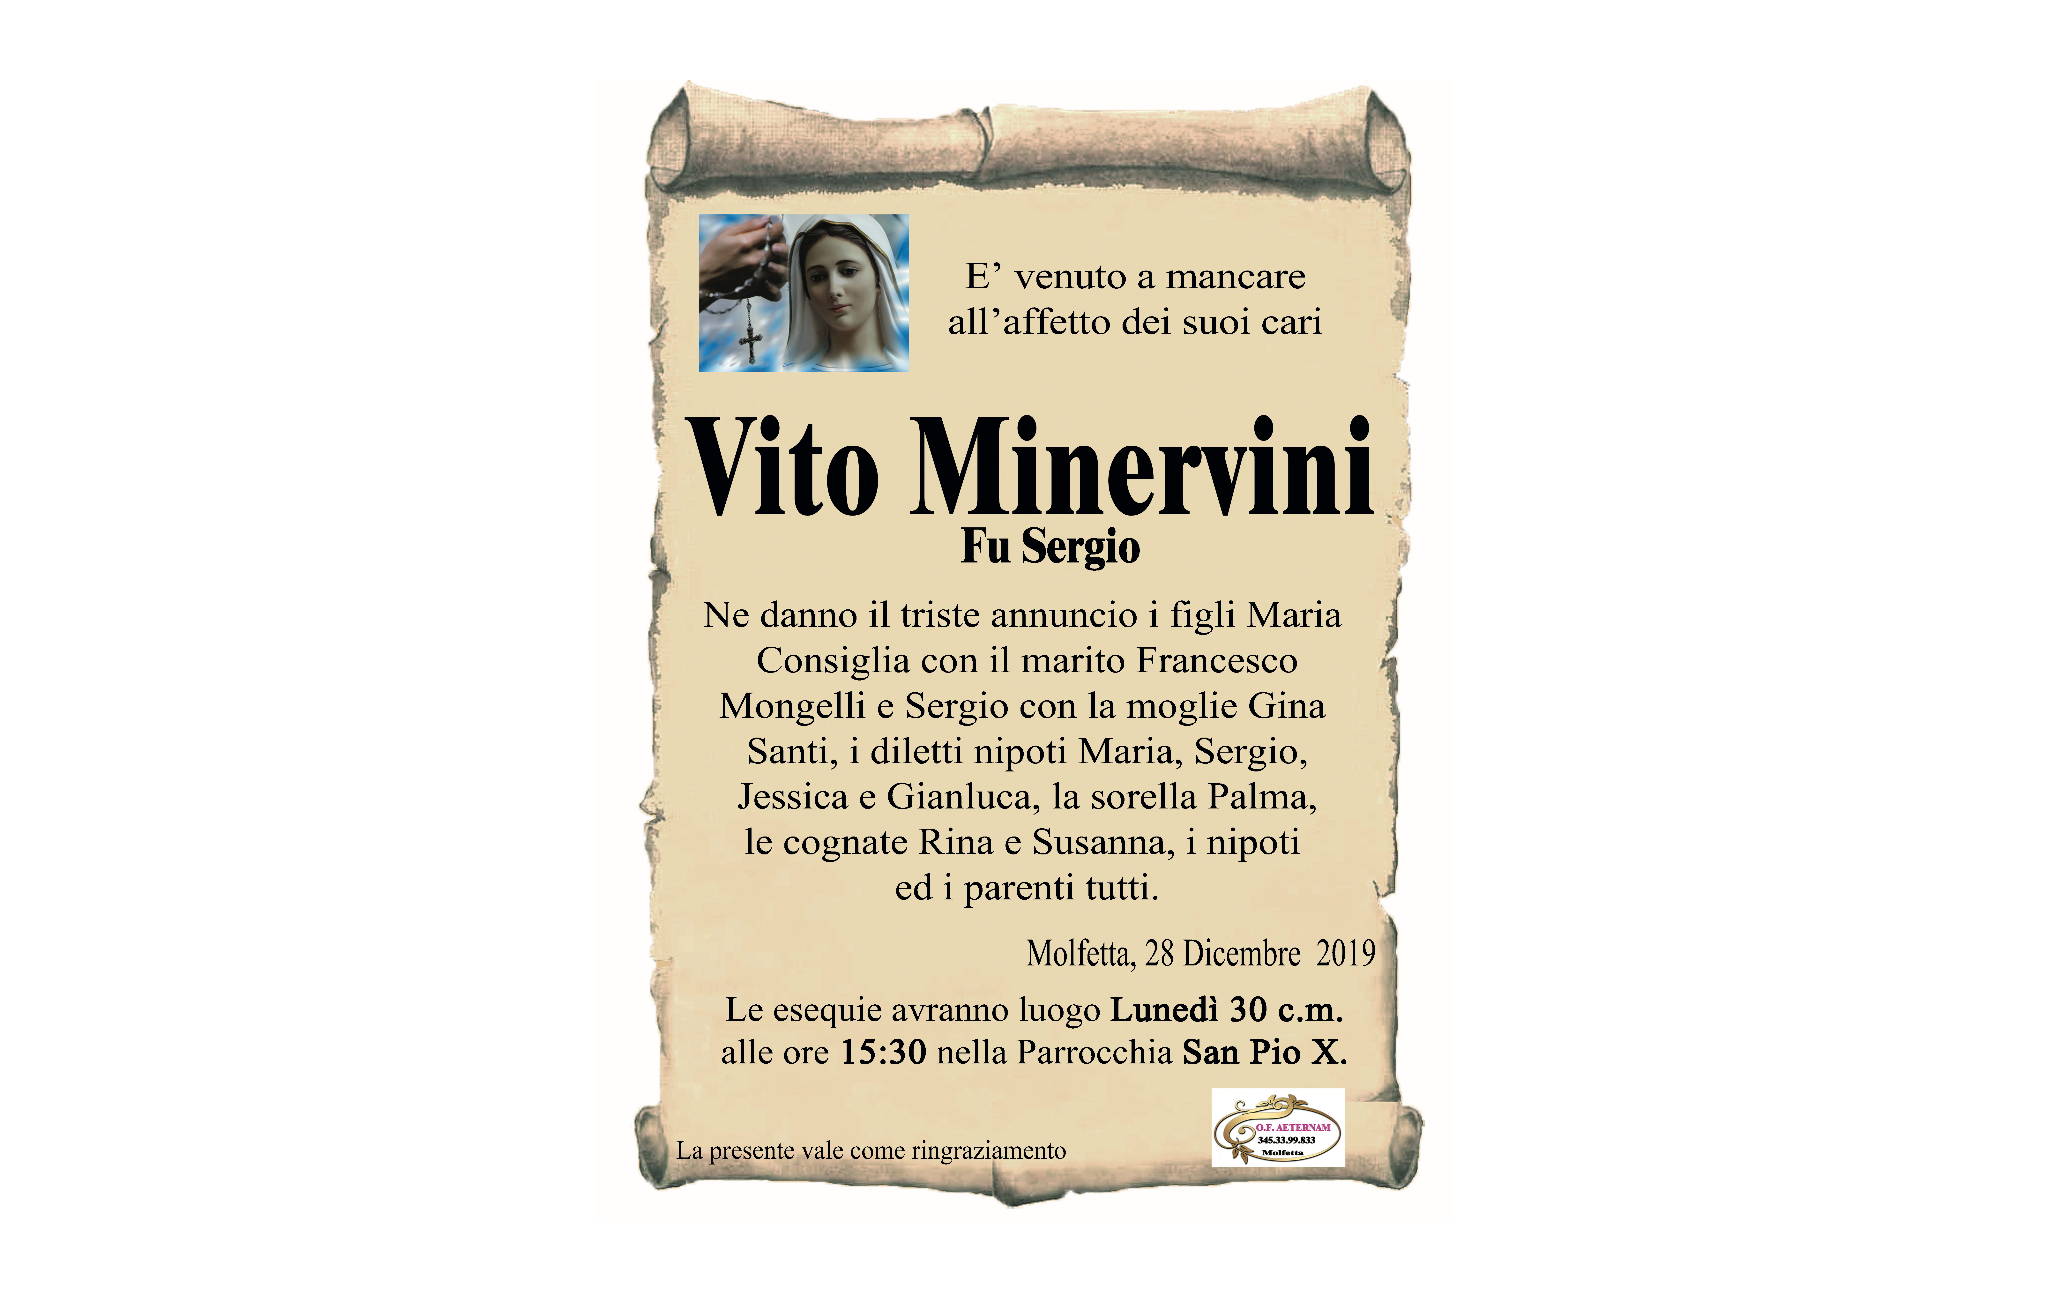 Vito Minervini